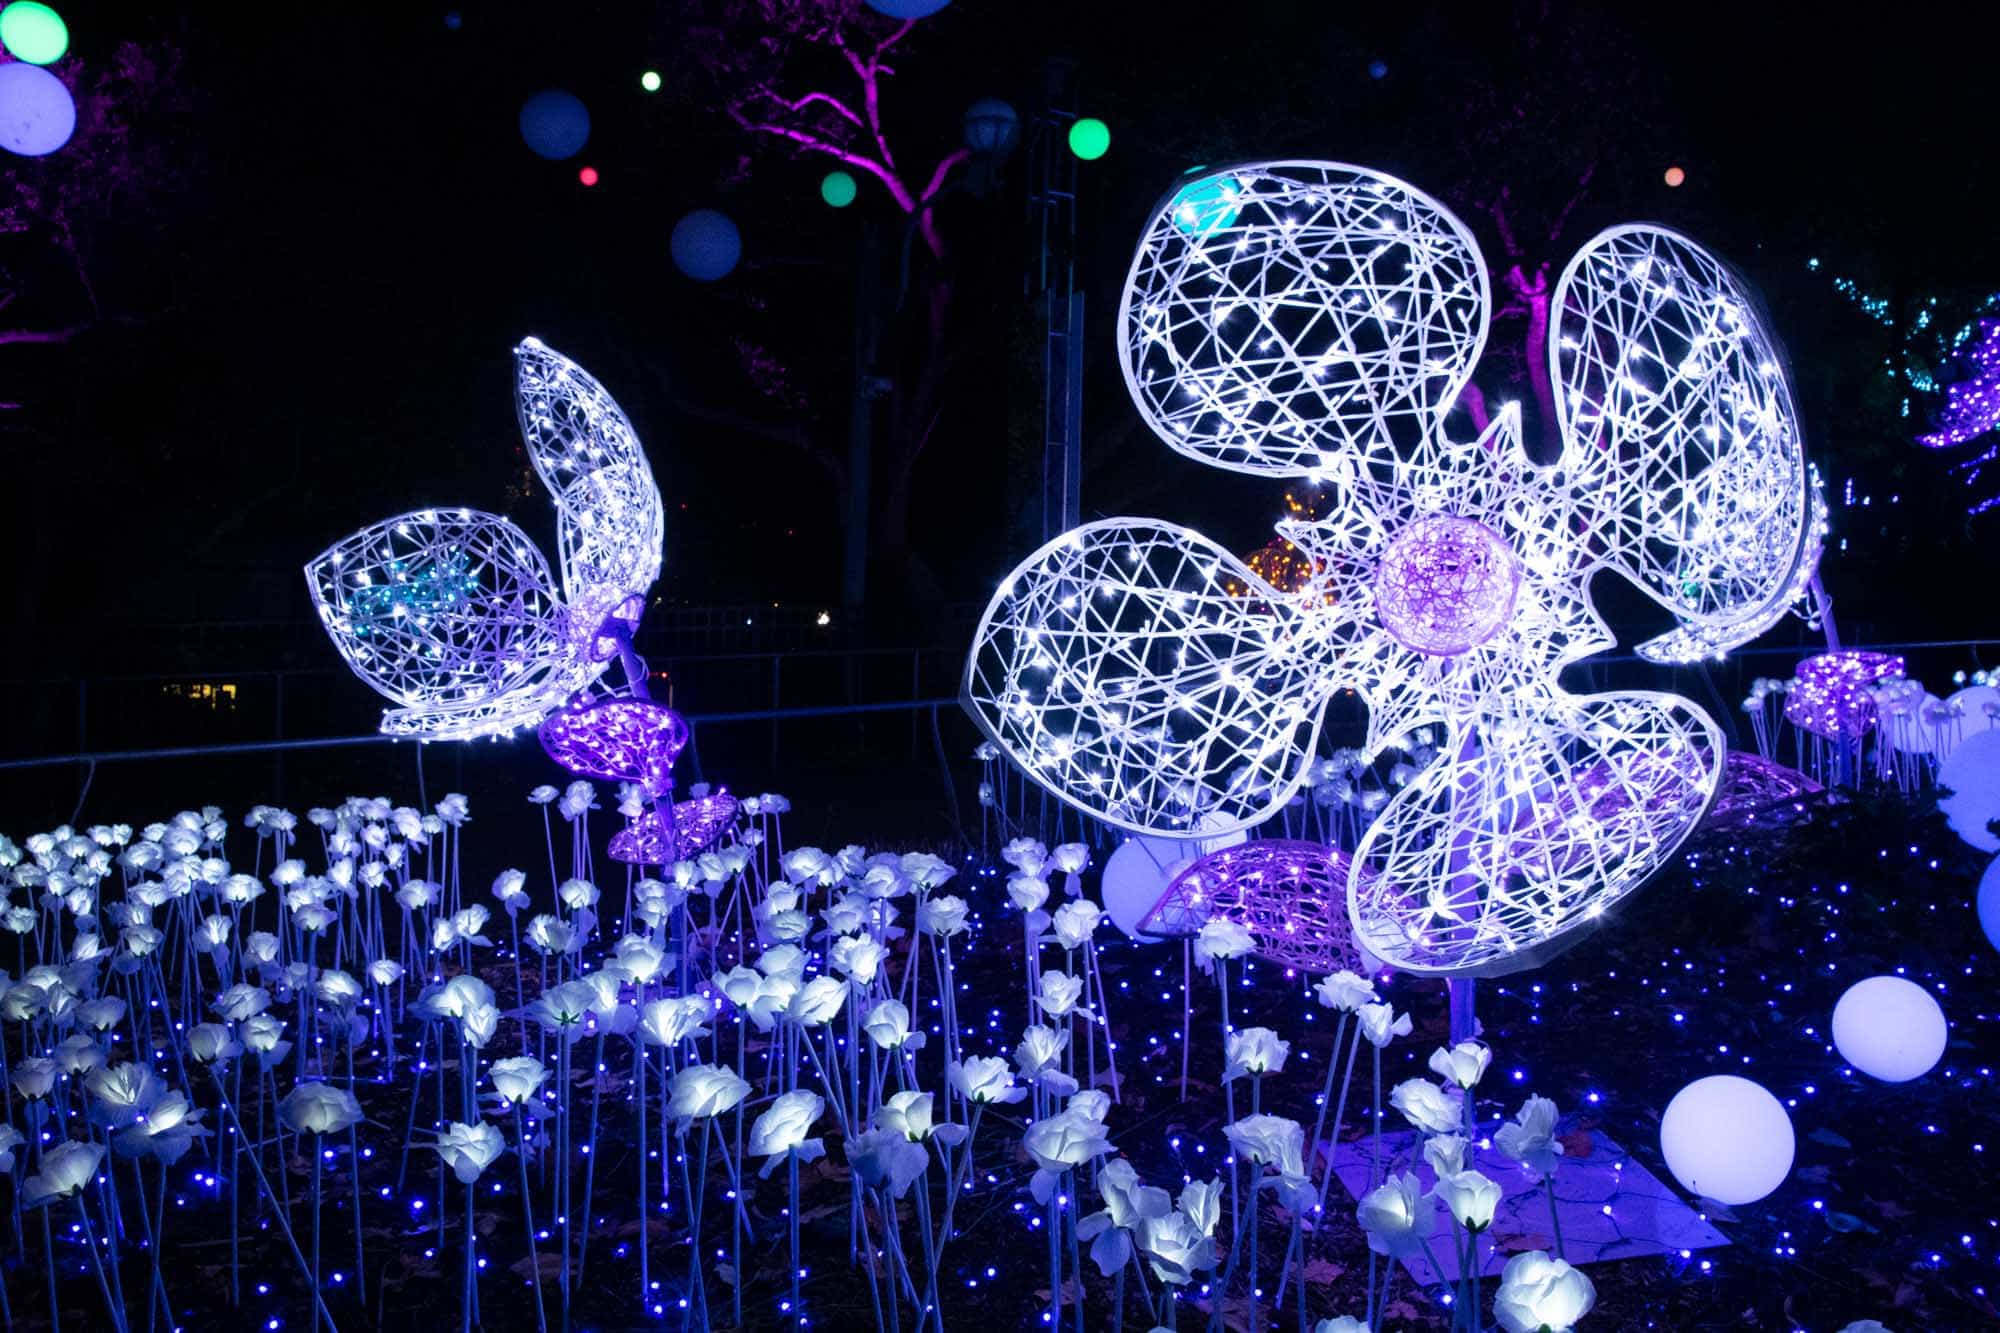 Light display featuring sculptural flowers